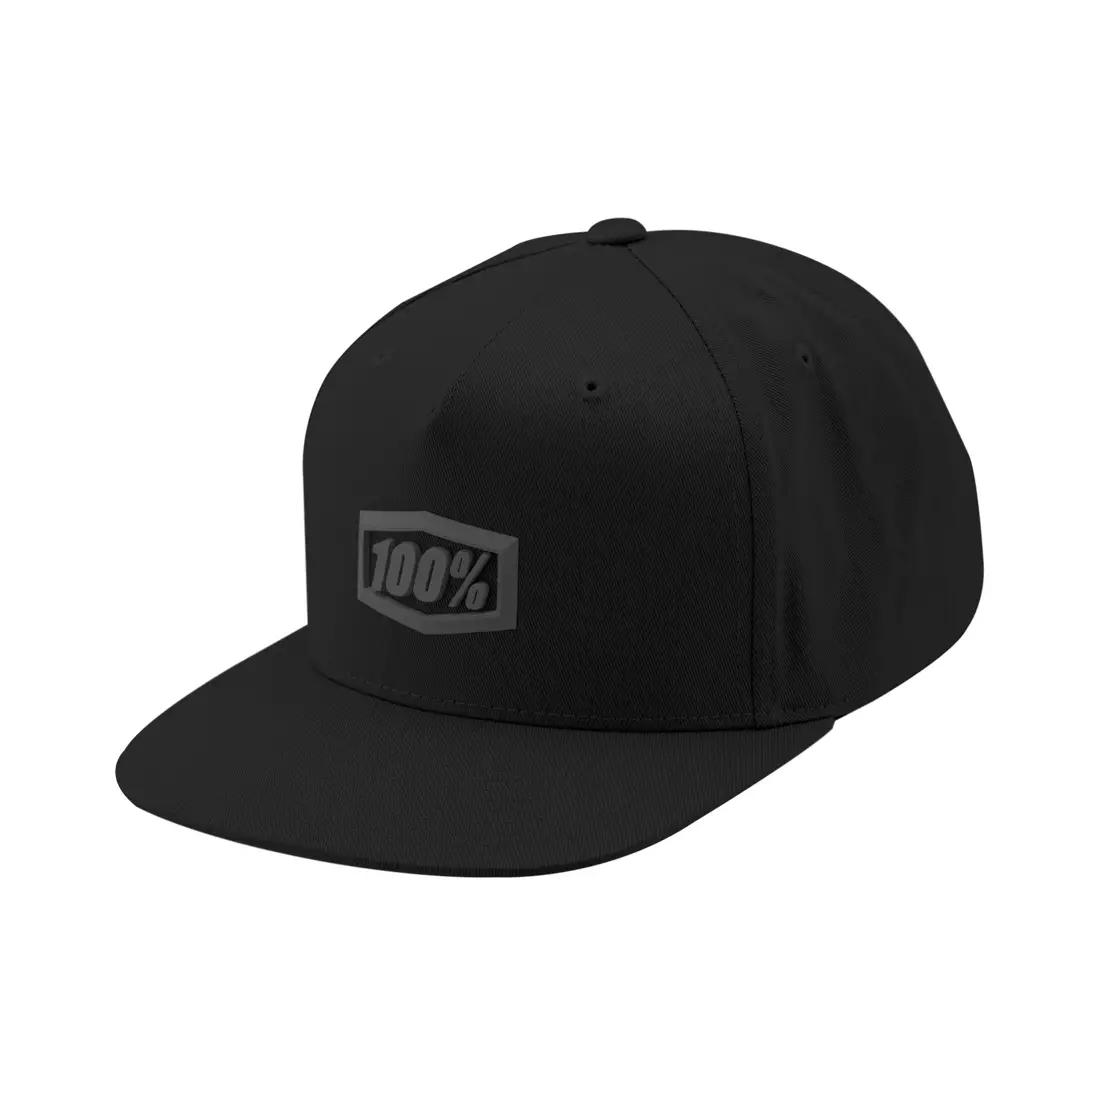 100% baseball cap ENTERPRISE Snapback Hat Black/Charcoal Speck 